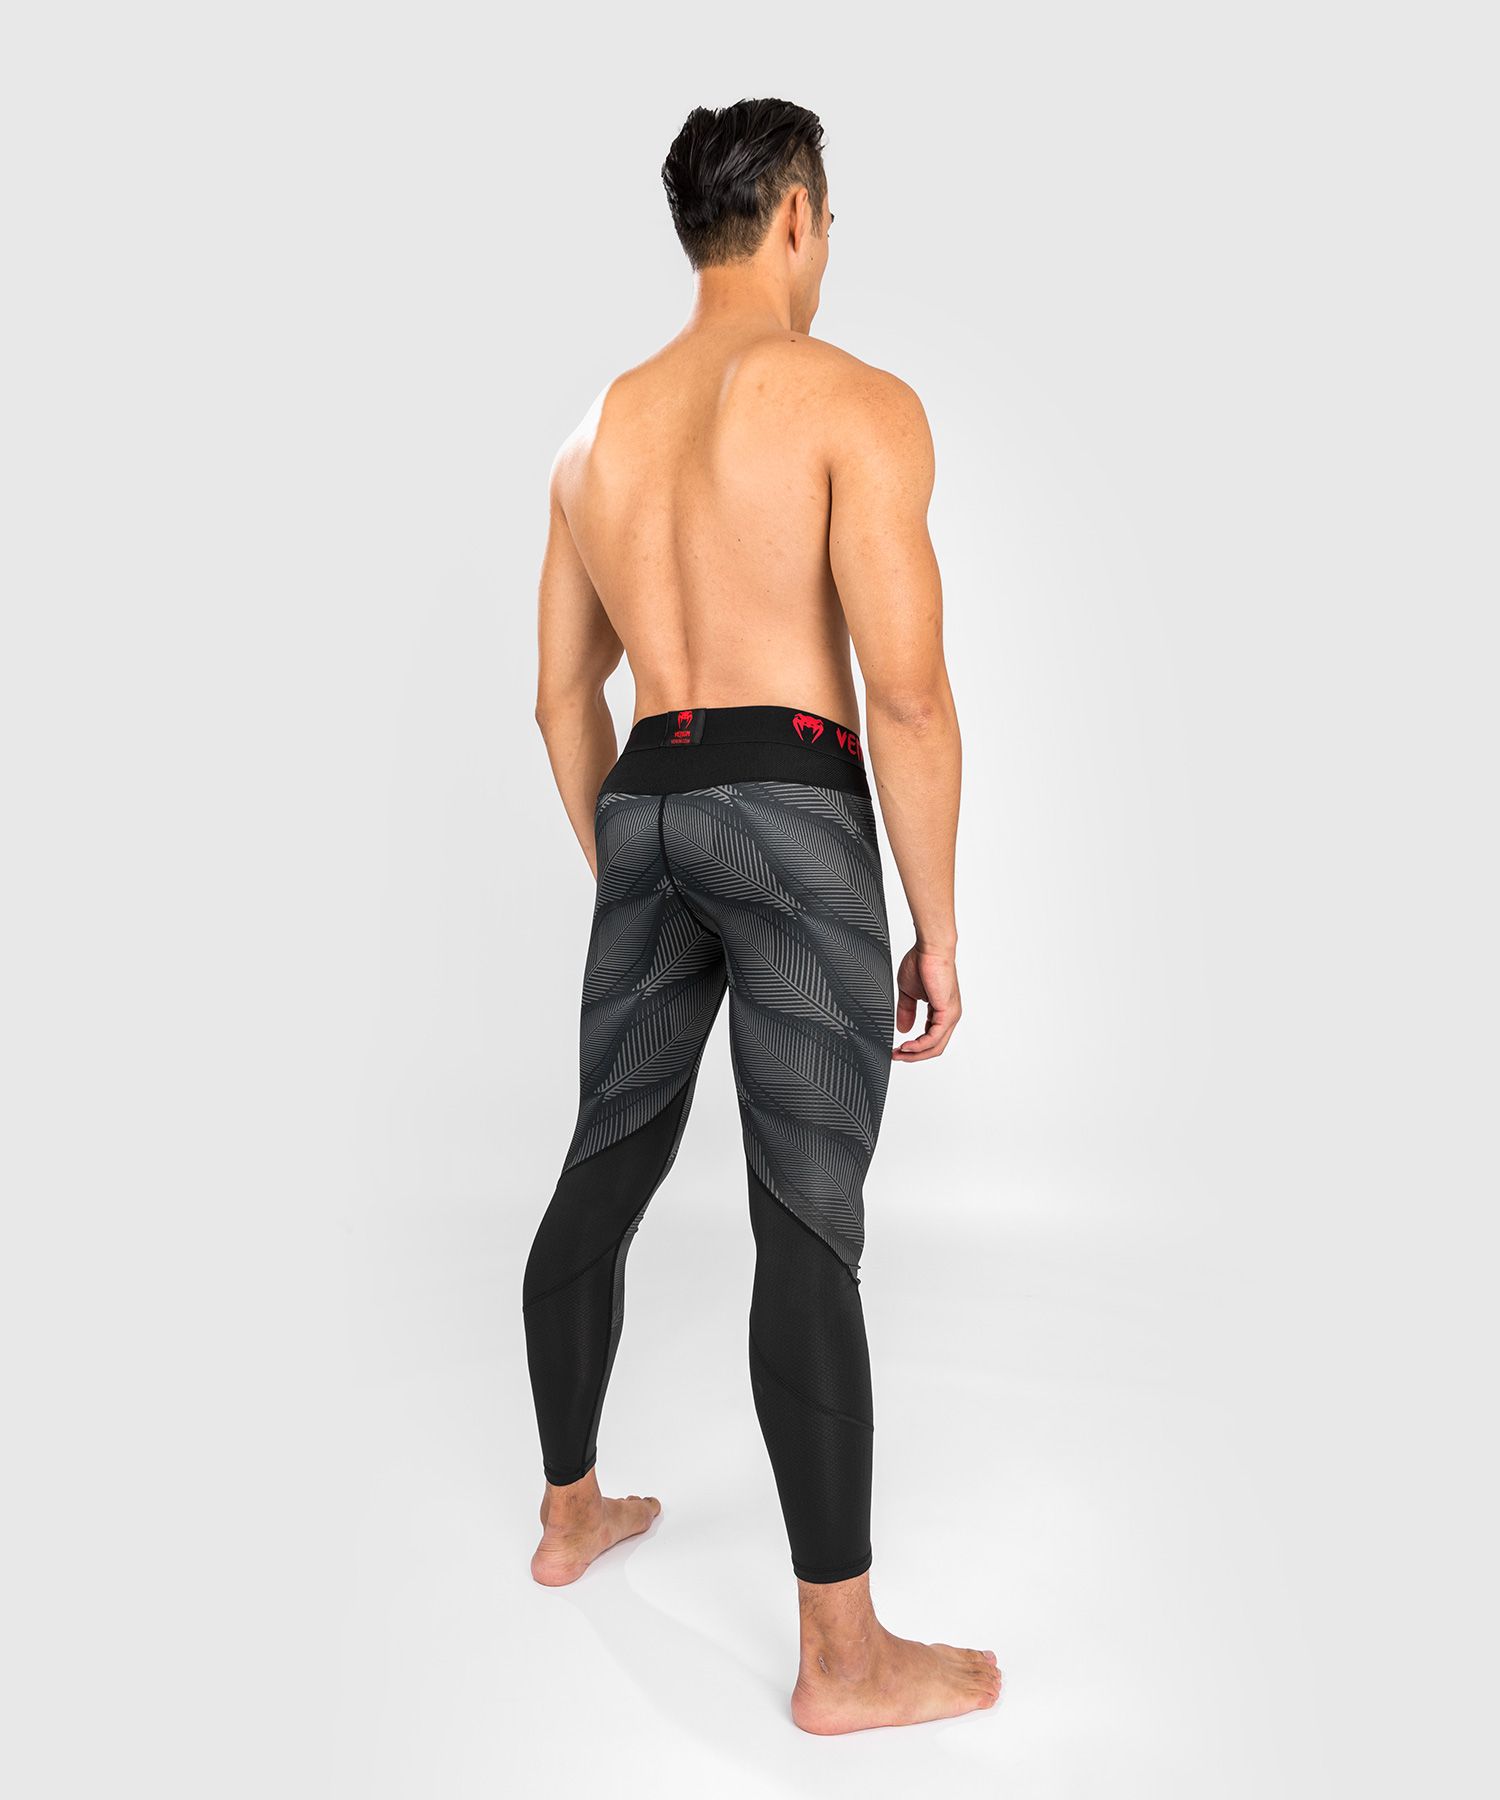 Pantaloni a compressione Venum Phantom - Nero/Rosso